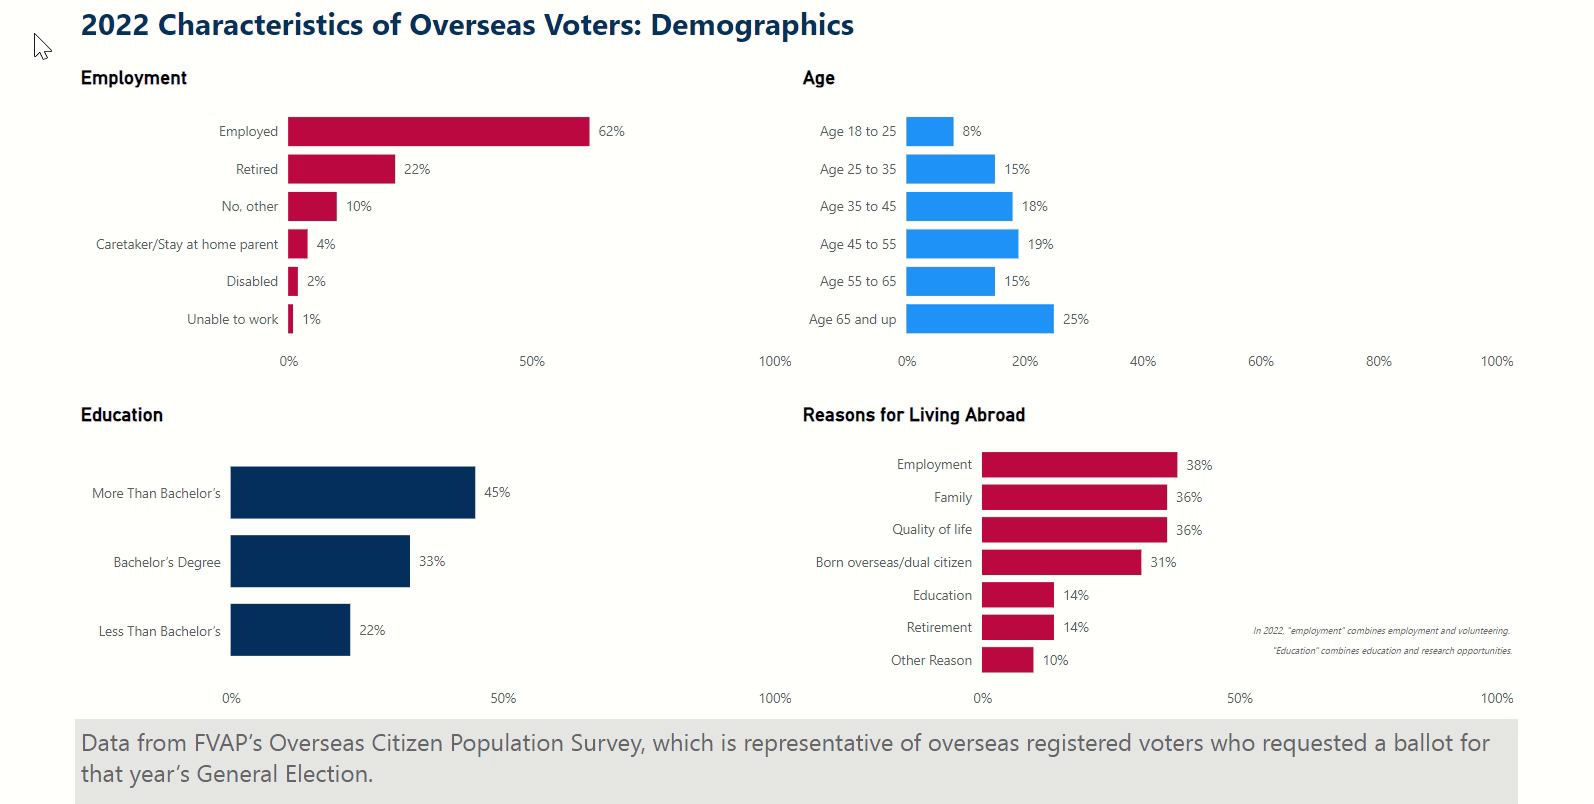 Image Characteristics of Overseas Voters - Demographics